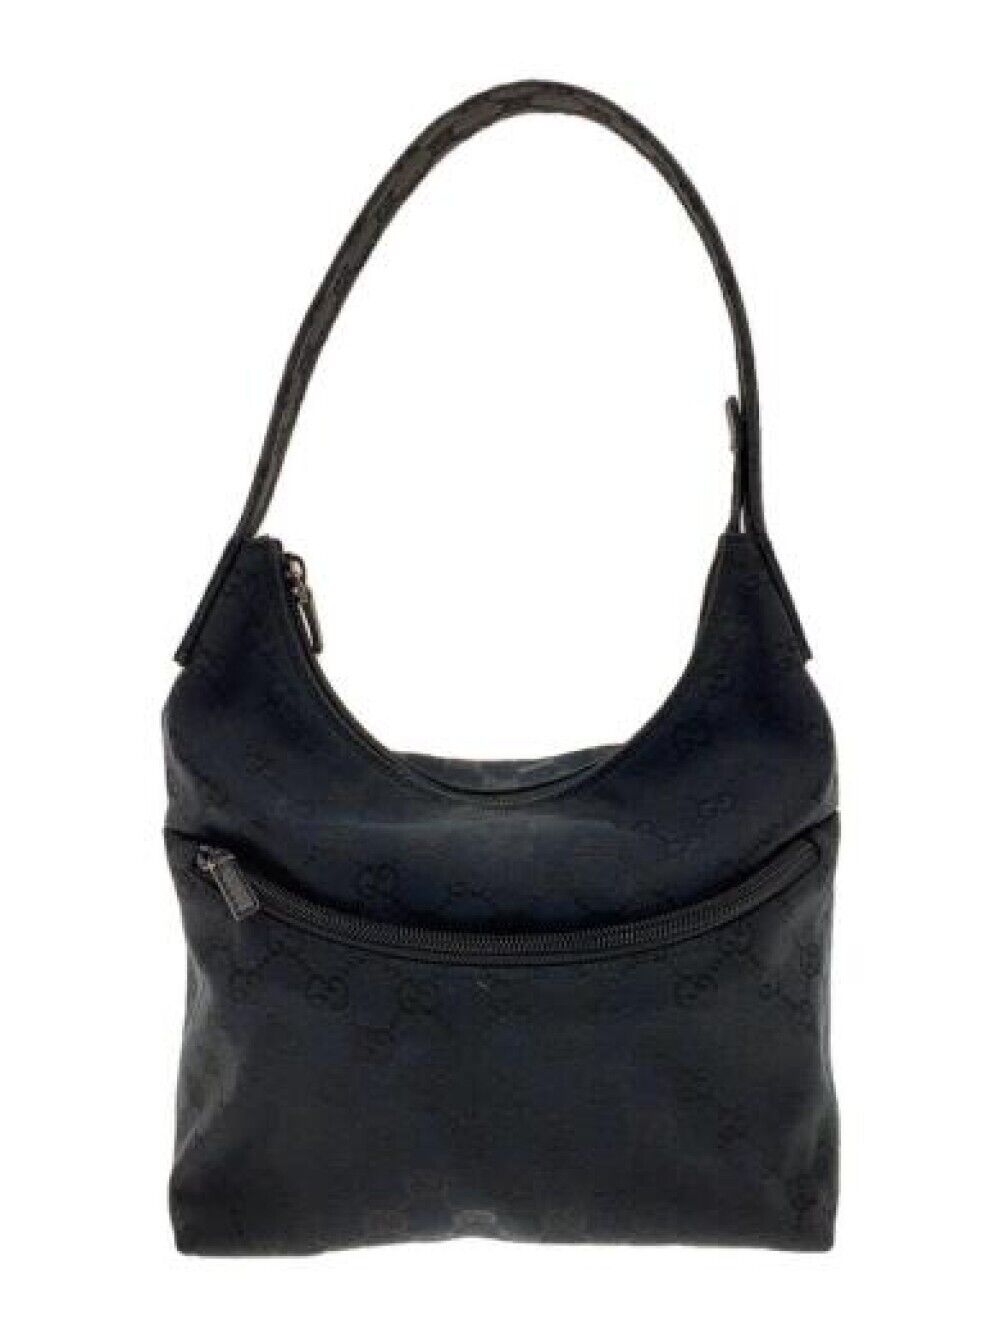 GUCCI GG Authentic Shoulder Bag 001 3386 GG Canvas Handbag Black S0685